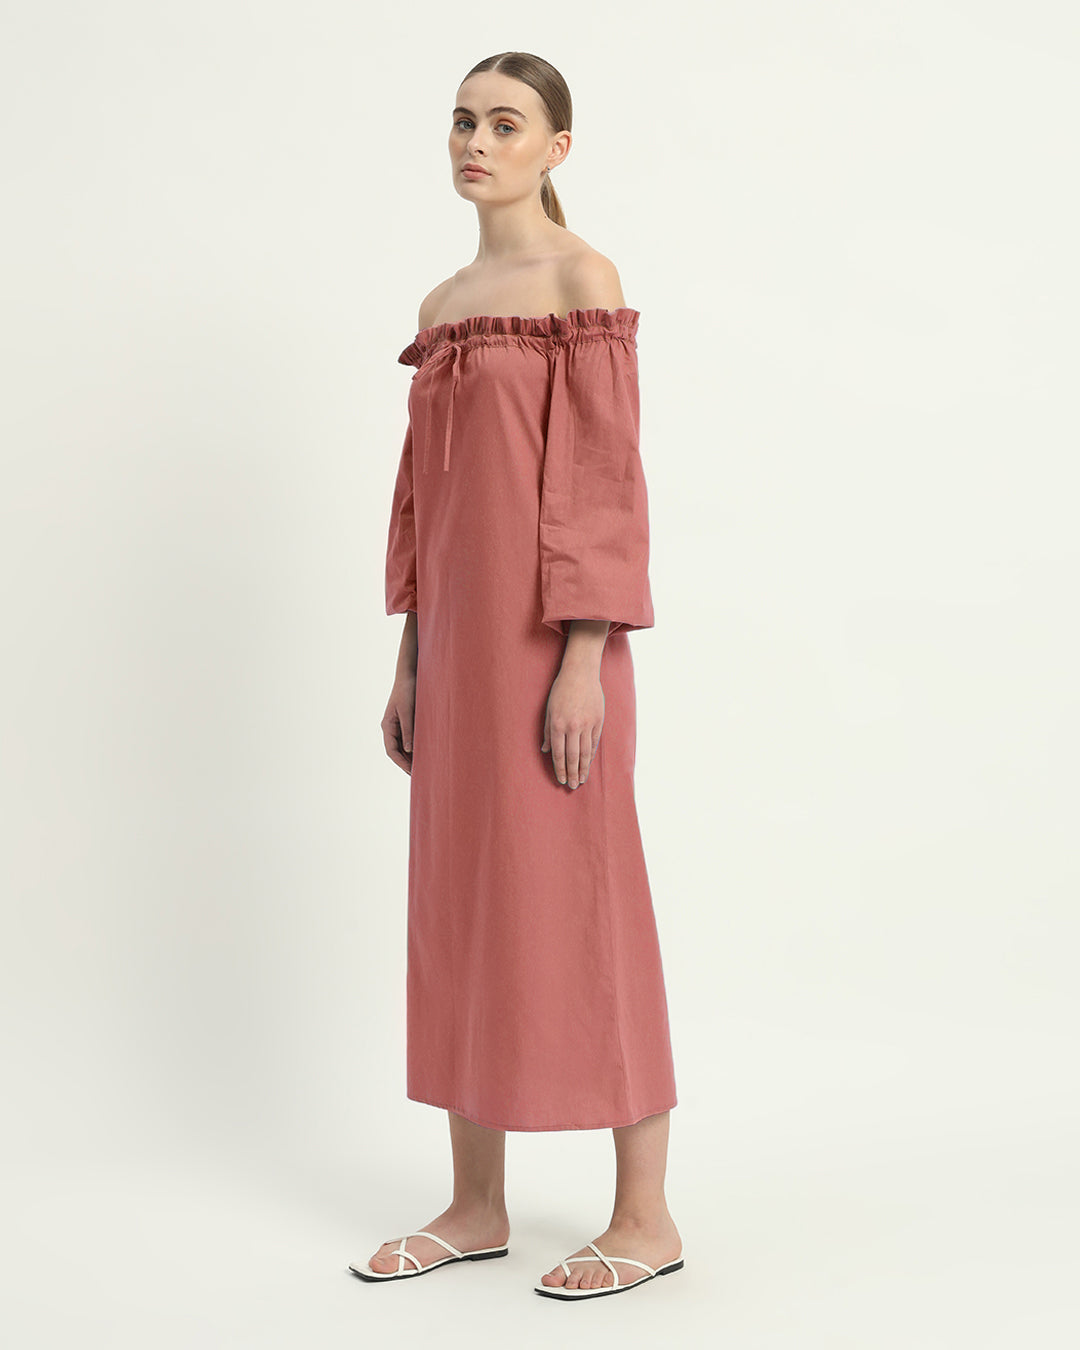 The Ivory Pink Carlisle Cotton Dress